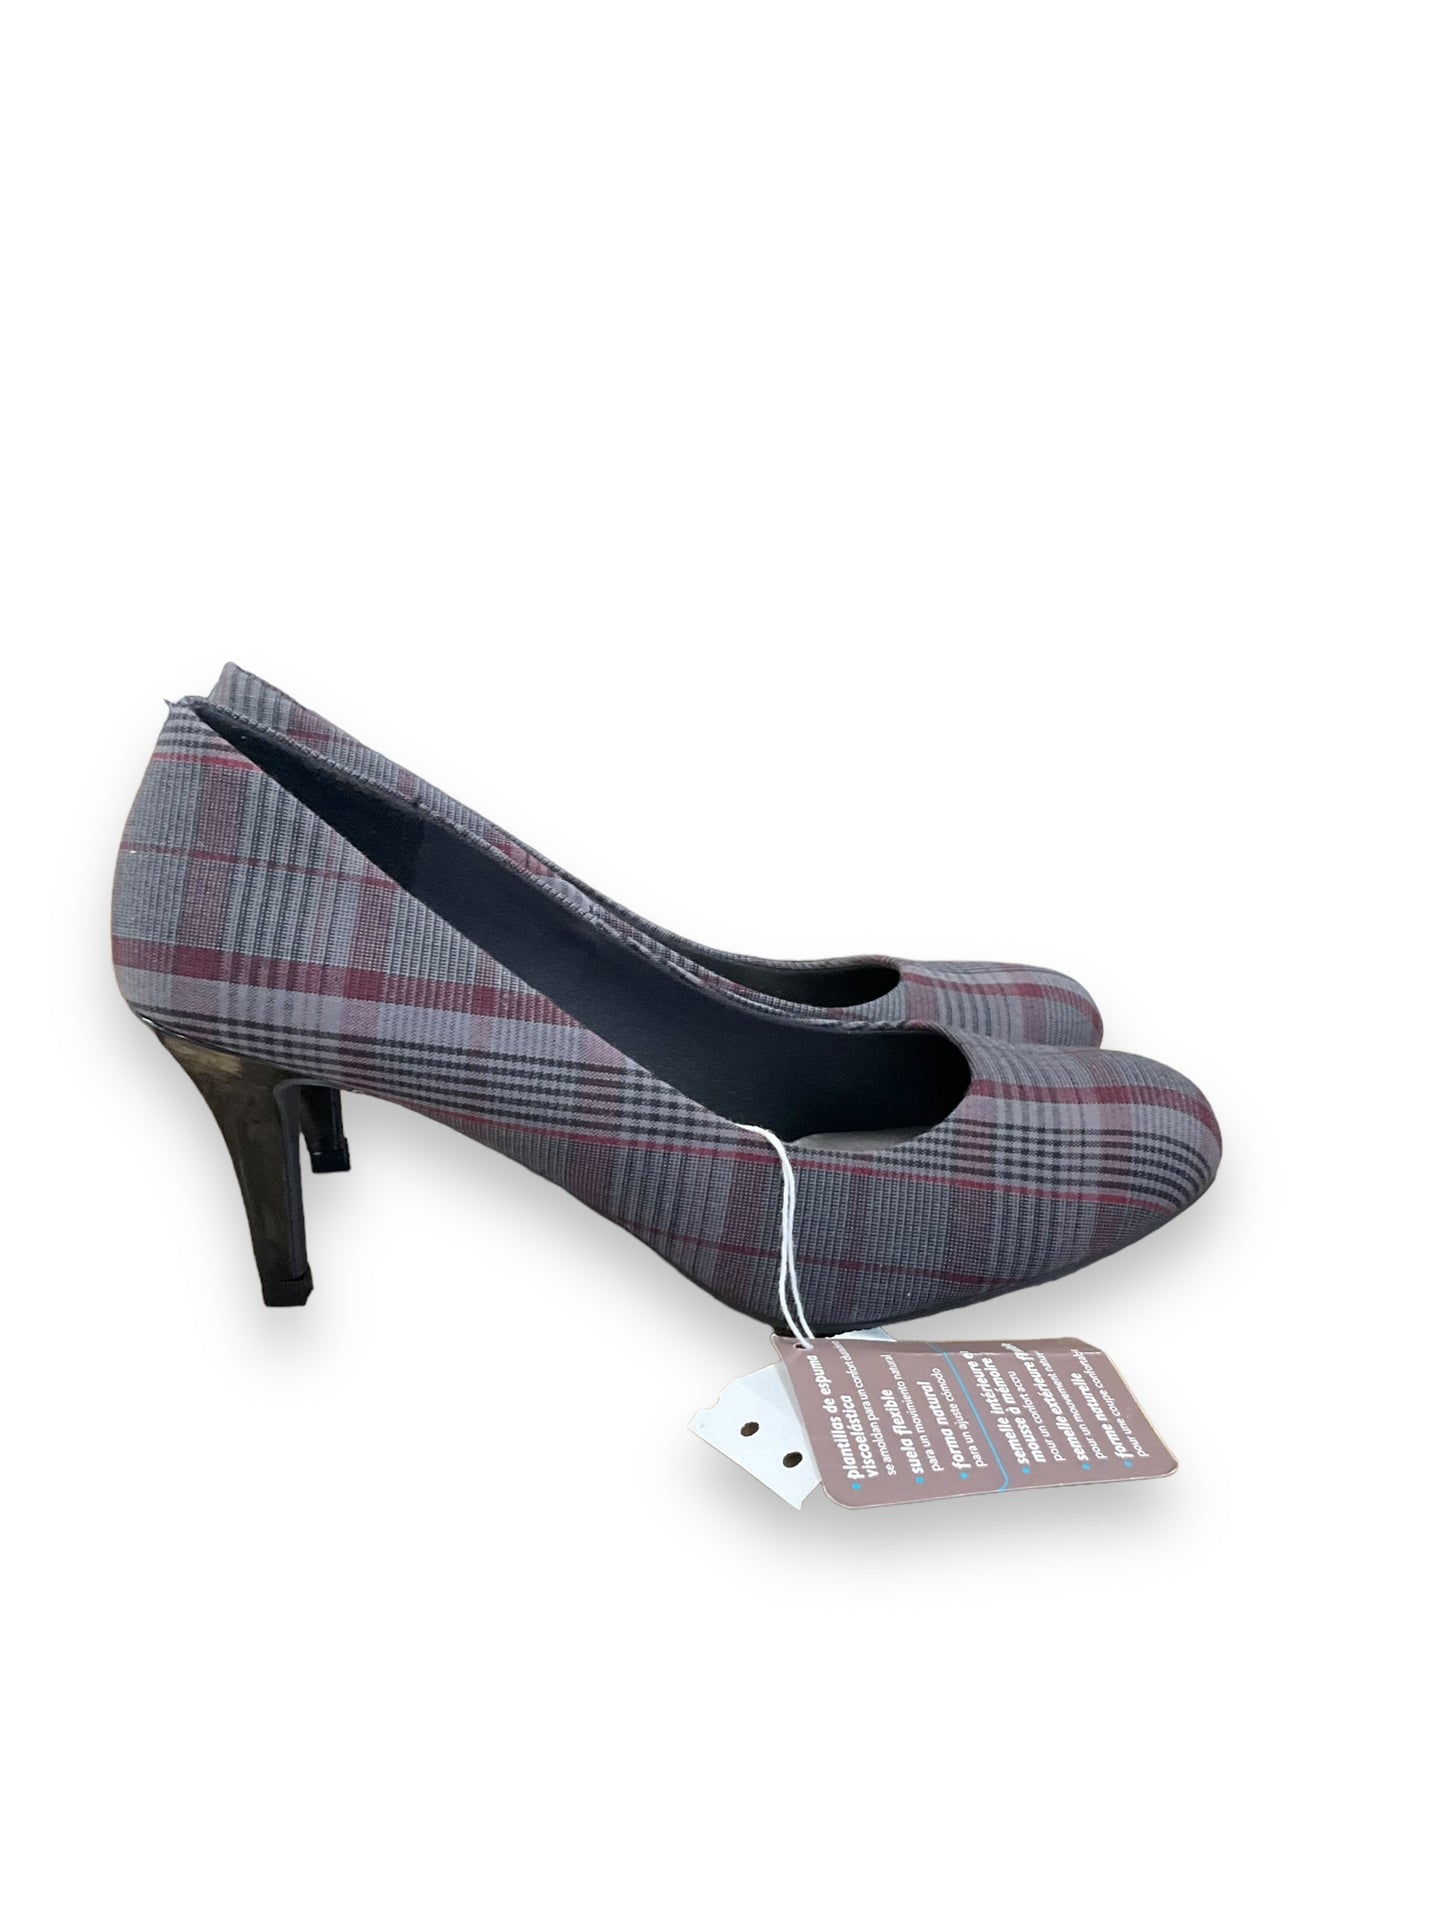 Shoes Heels Stiletto By Comfort Plus  Size: 8